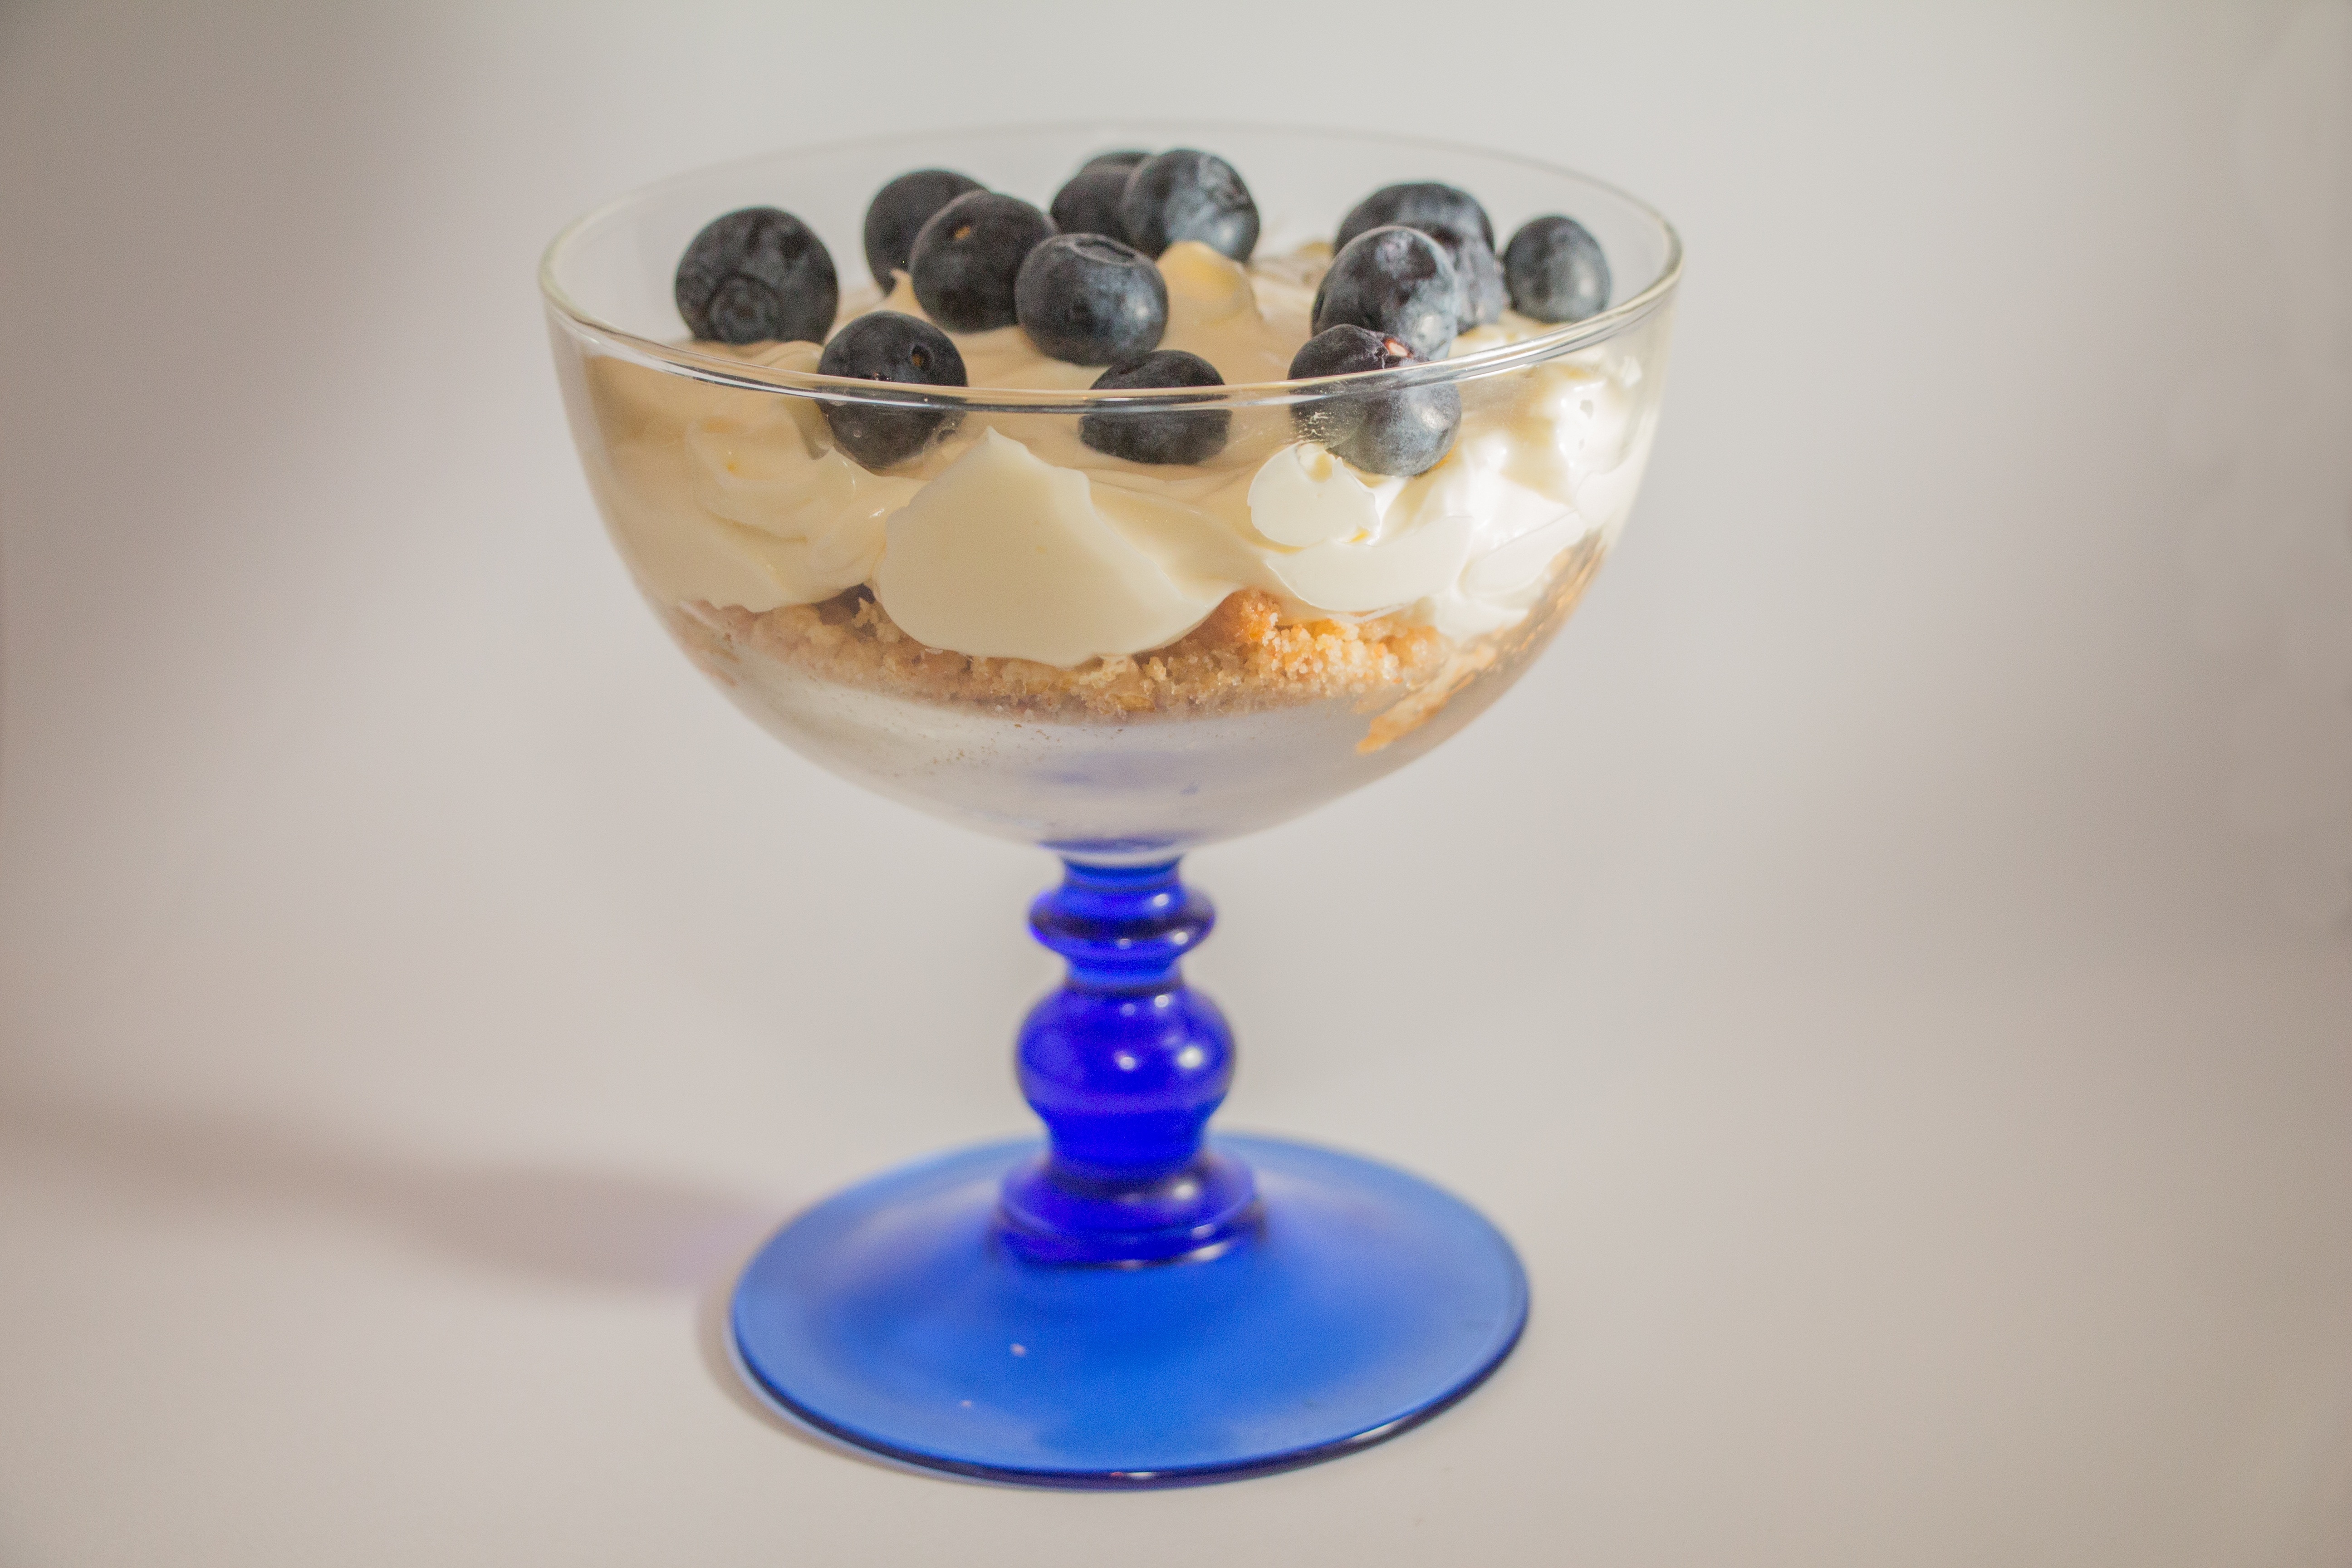 blueberries icing dessert on parfait glass